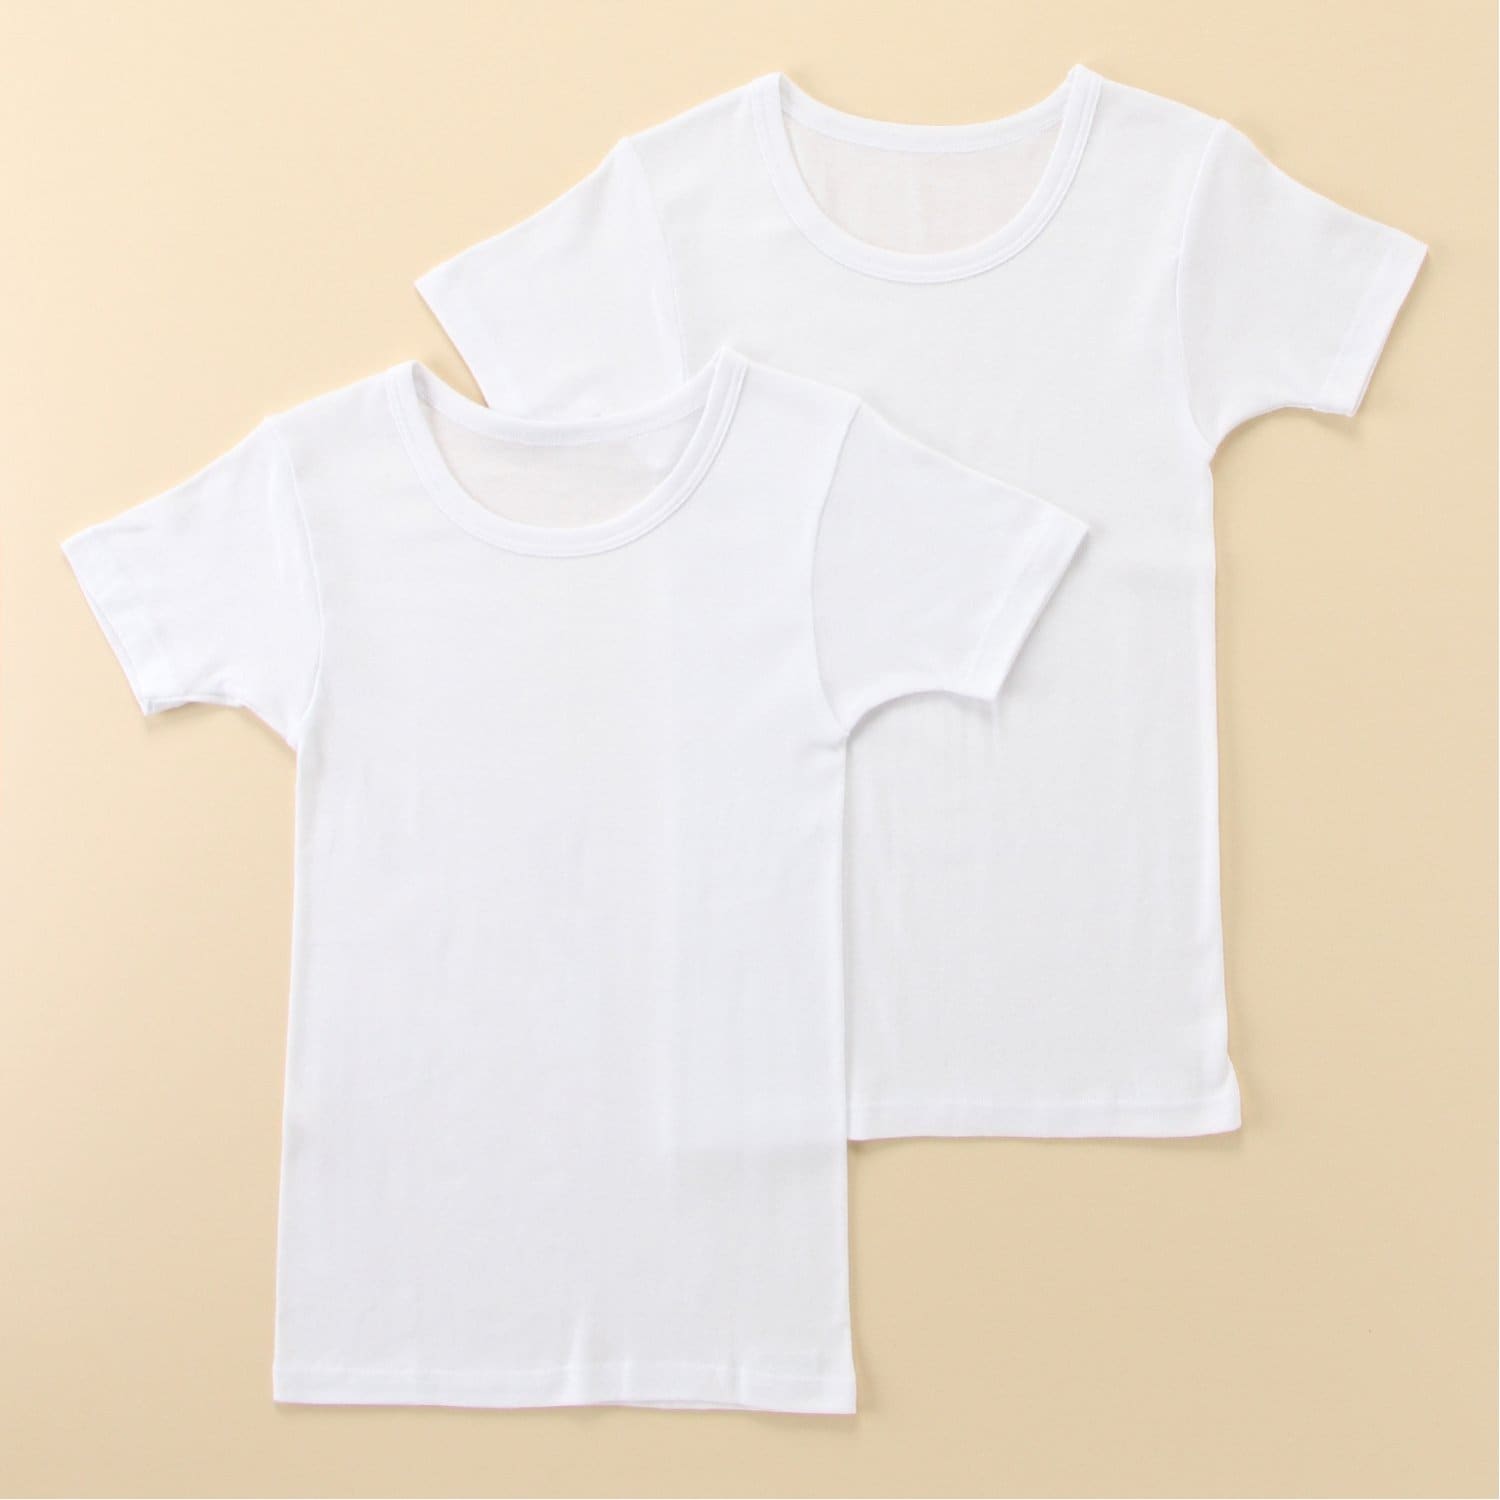 【SOKY】抗菌防臭脇すっきり無縫製 綿素材半袖Tシャツ2枚組【ジュニア肌着】